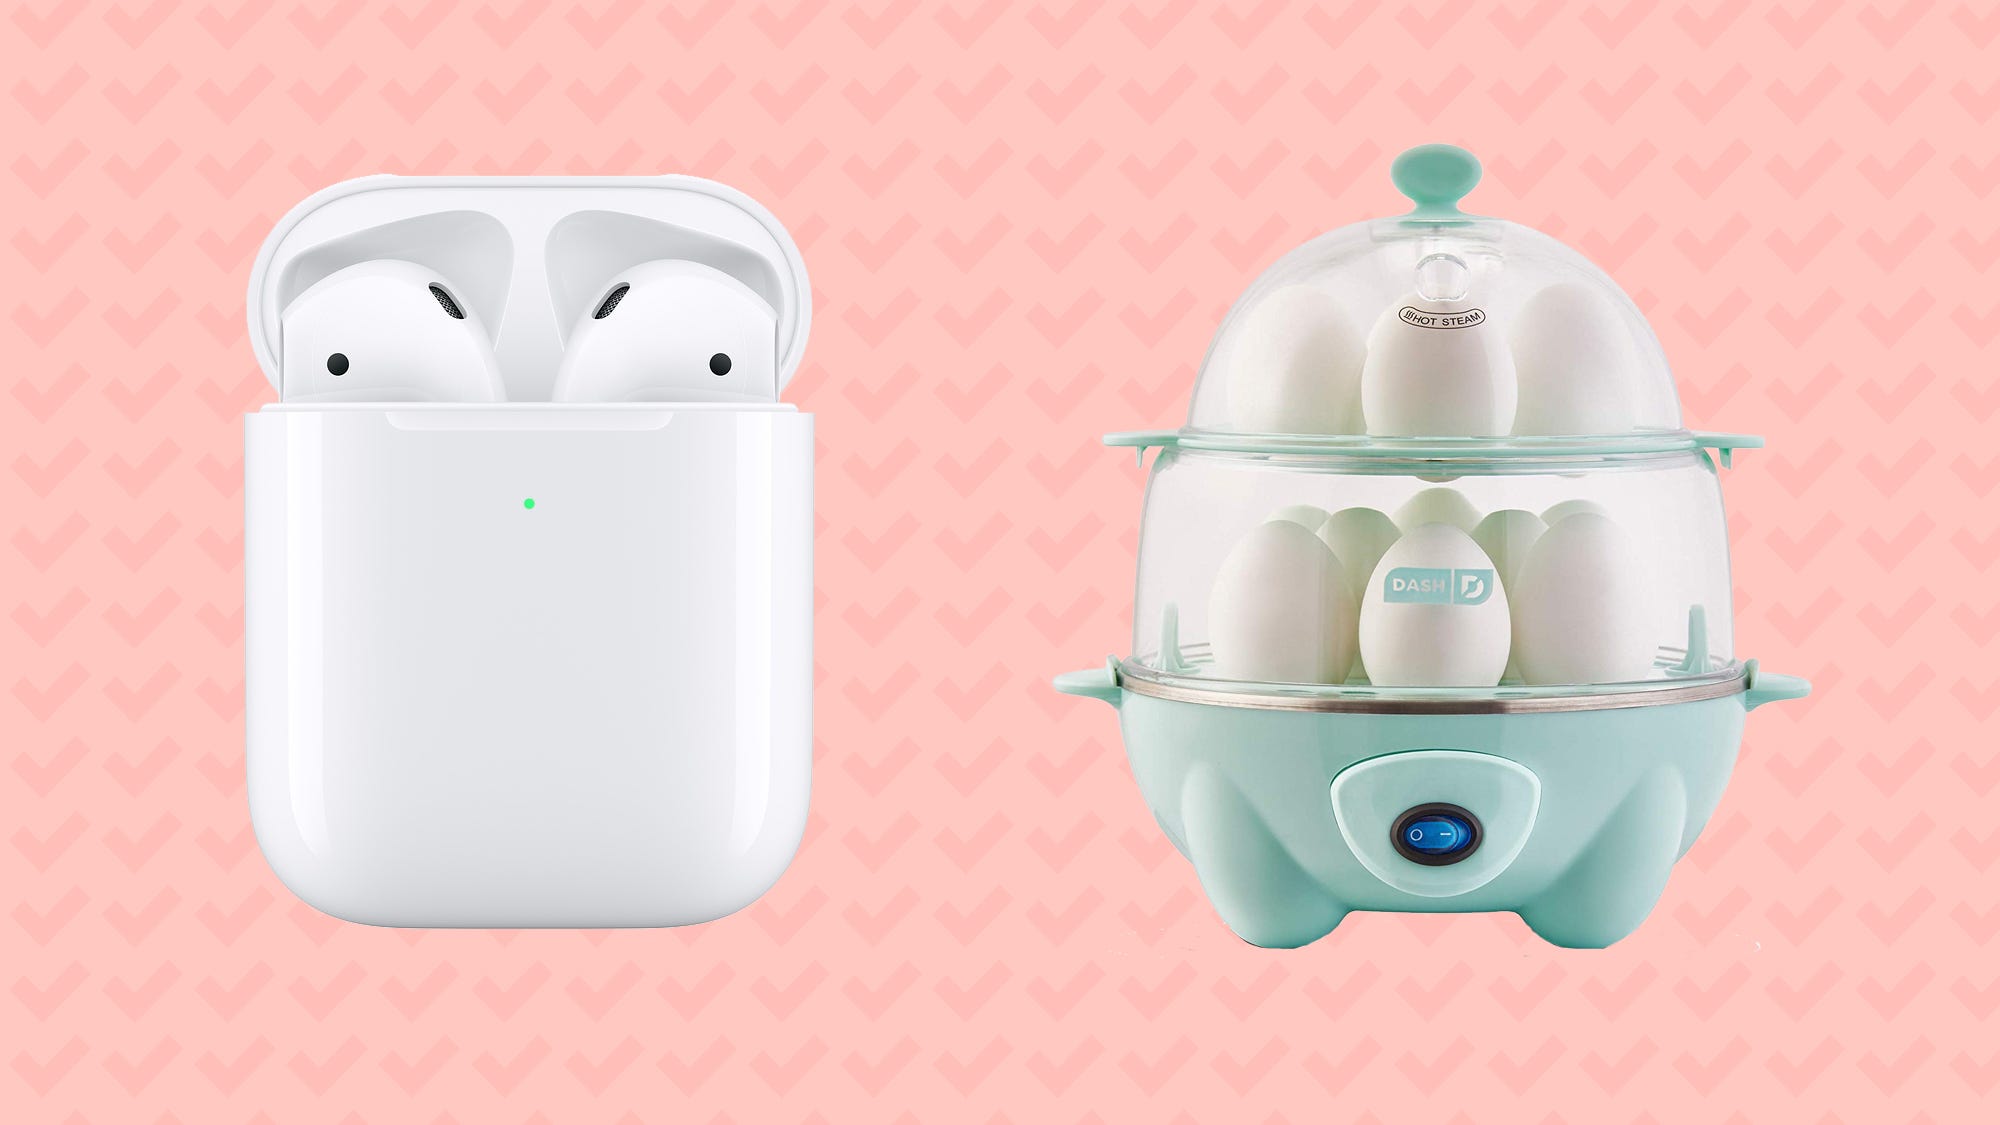 Apple Airpods, Eero, egg cookers 